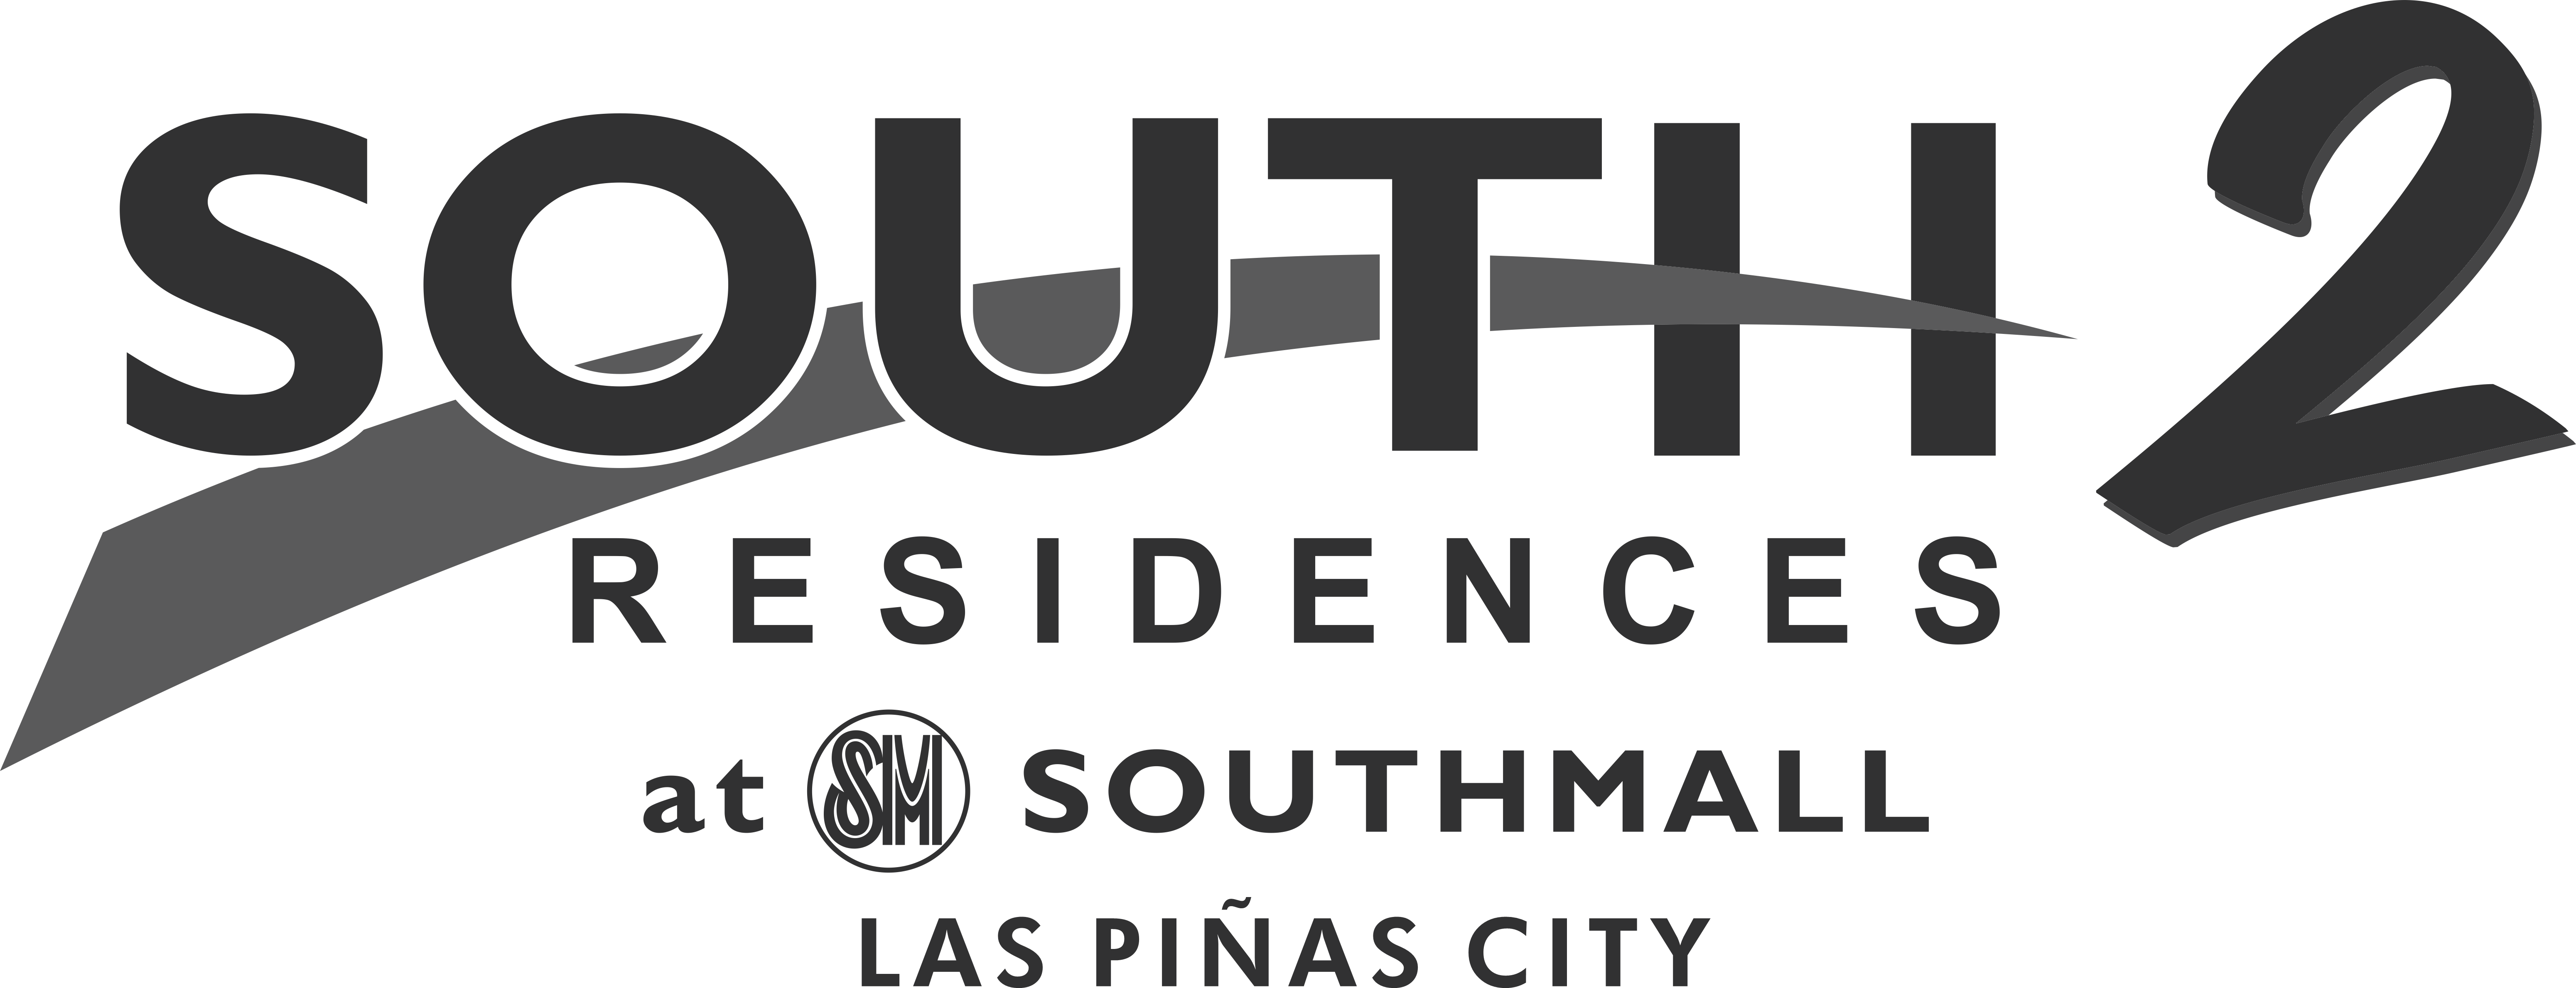 South-2-Residences